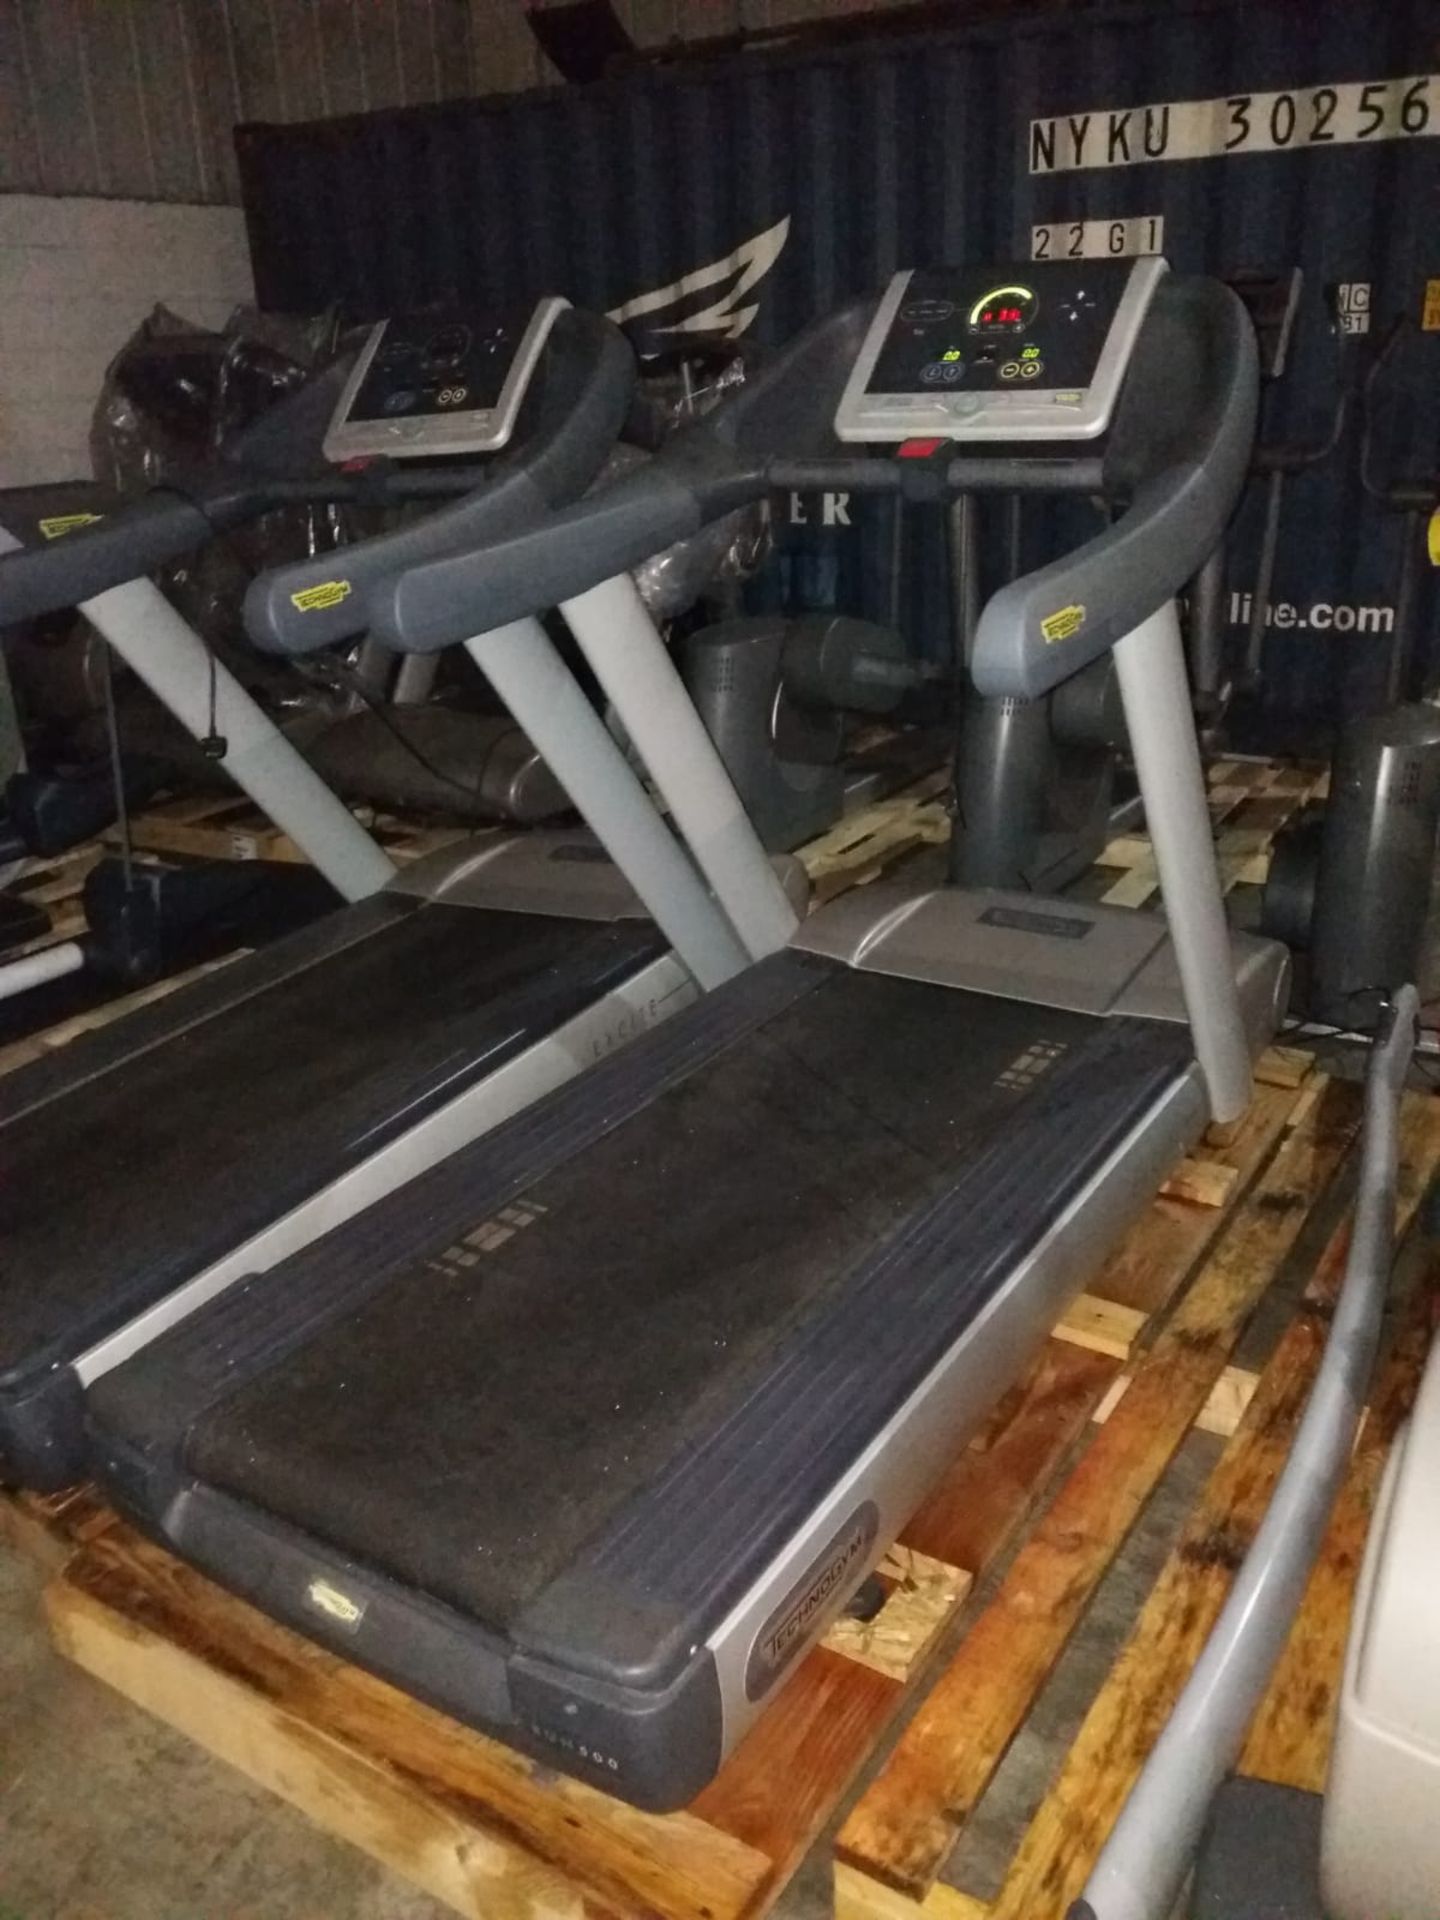 Technogym Excite 500 treadmill.